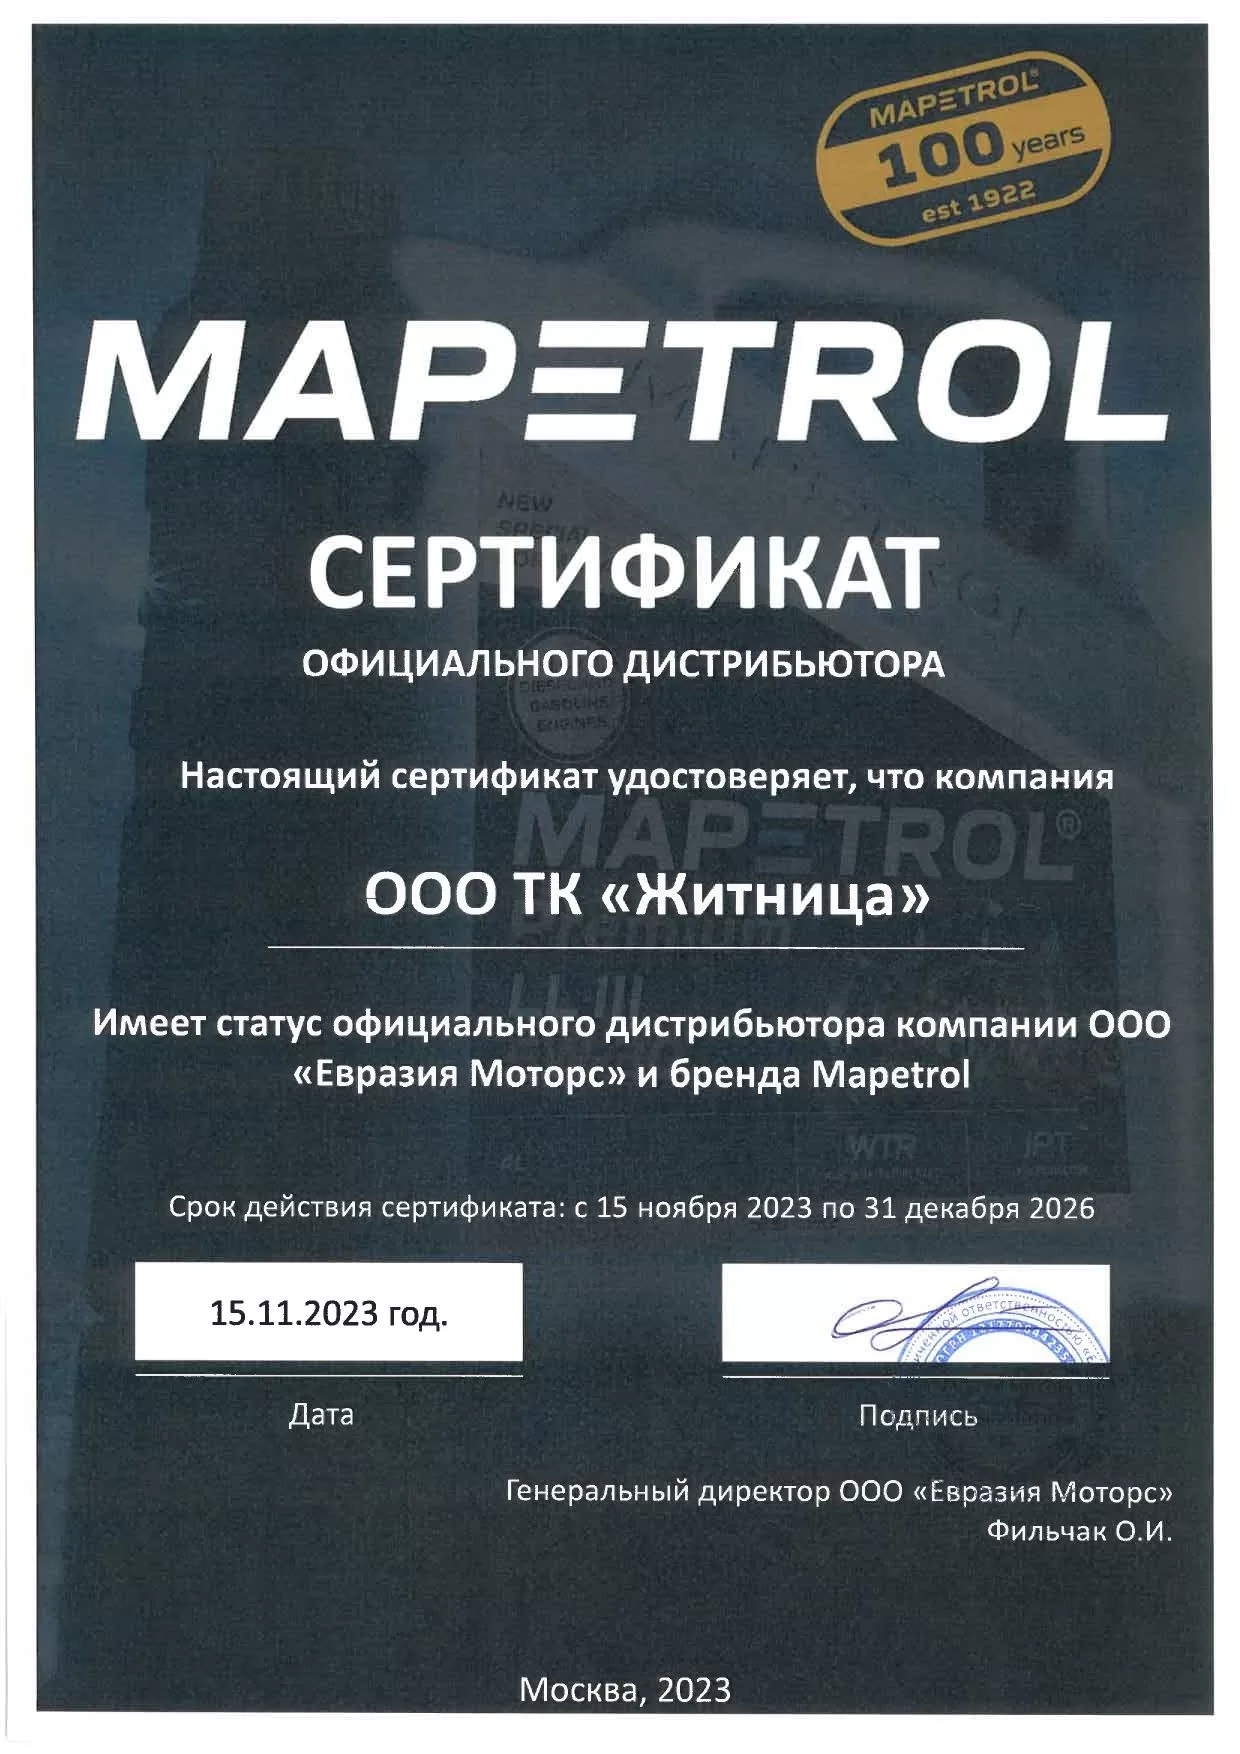 Сертификат дистрибьютора MAPETROL